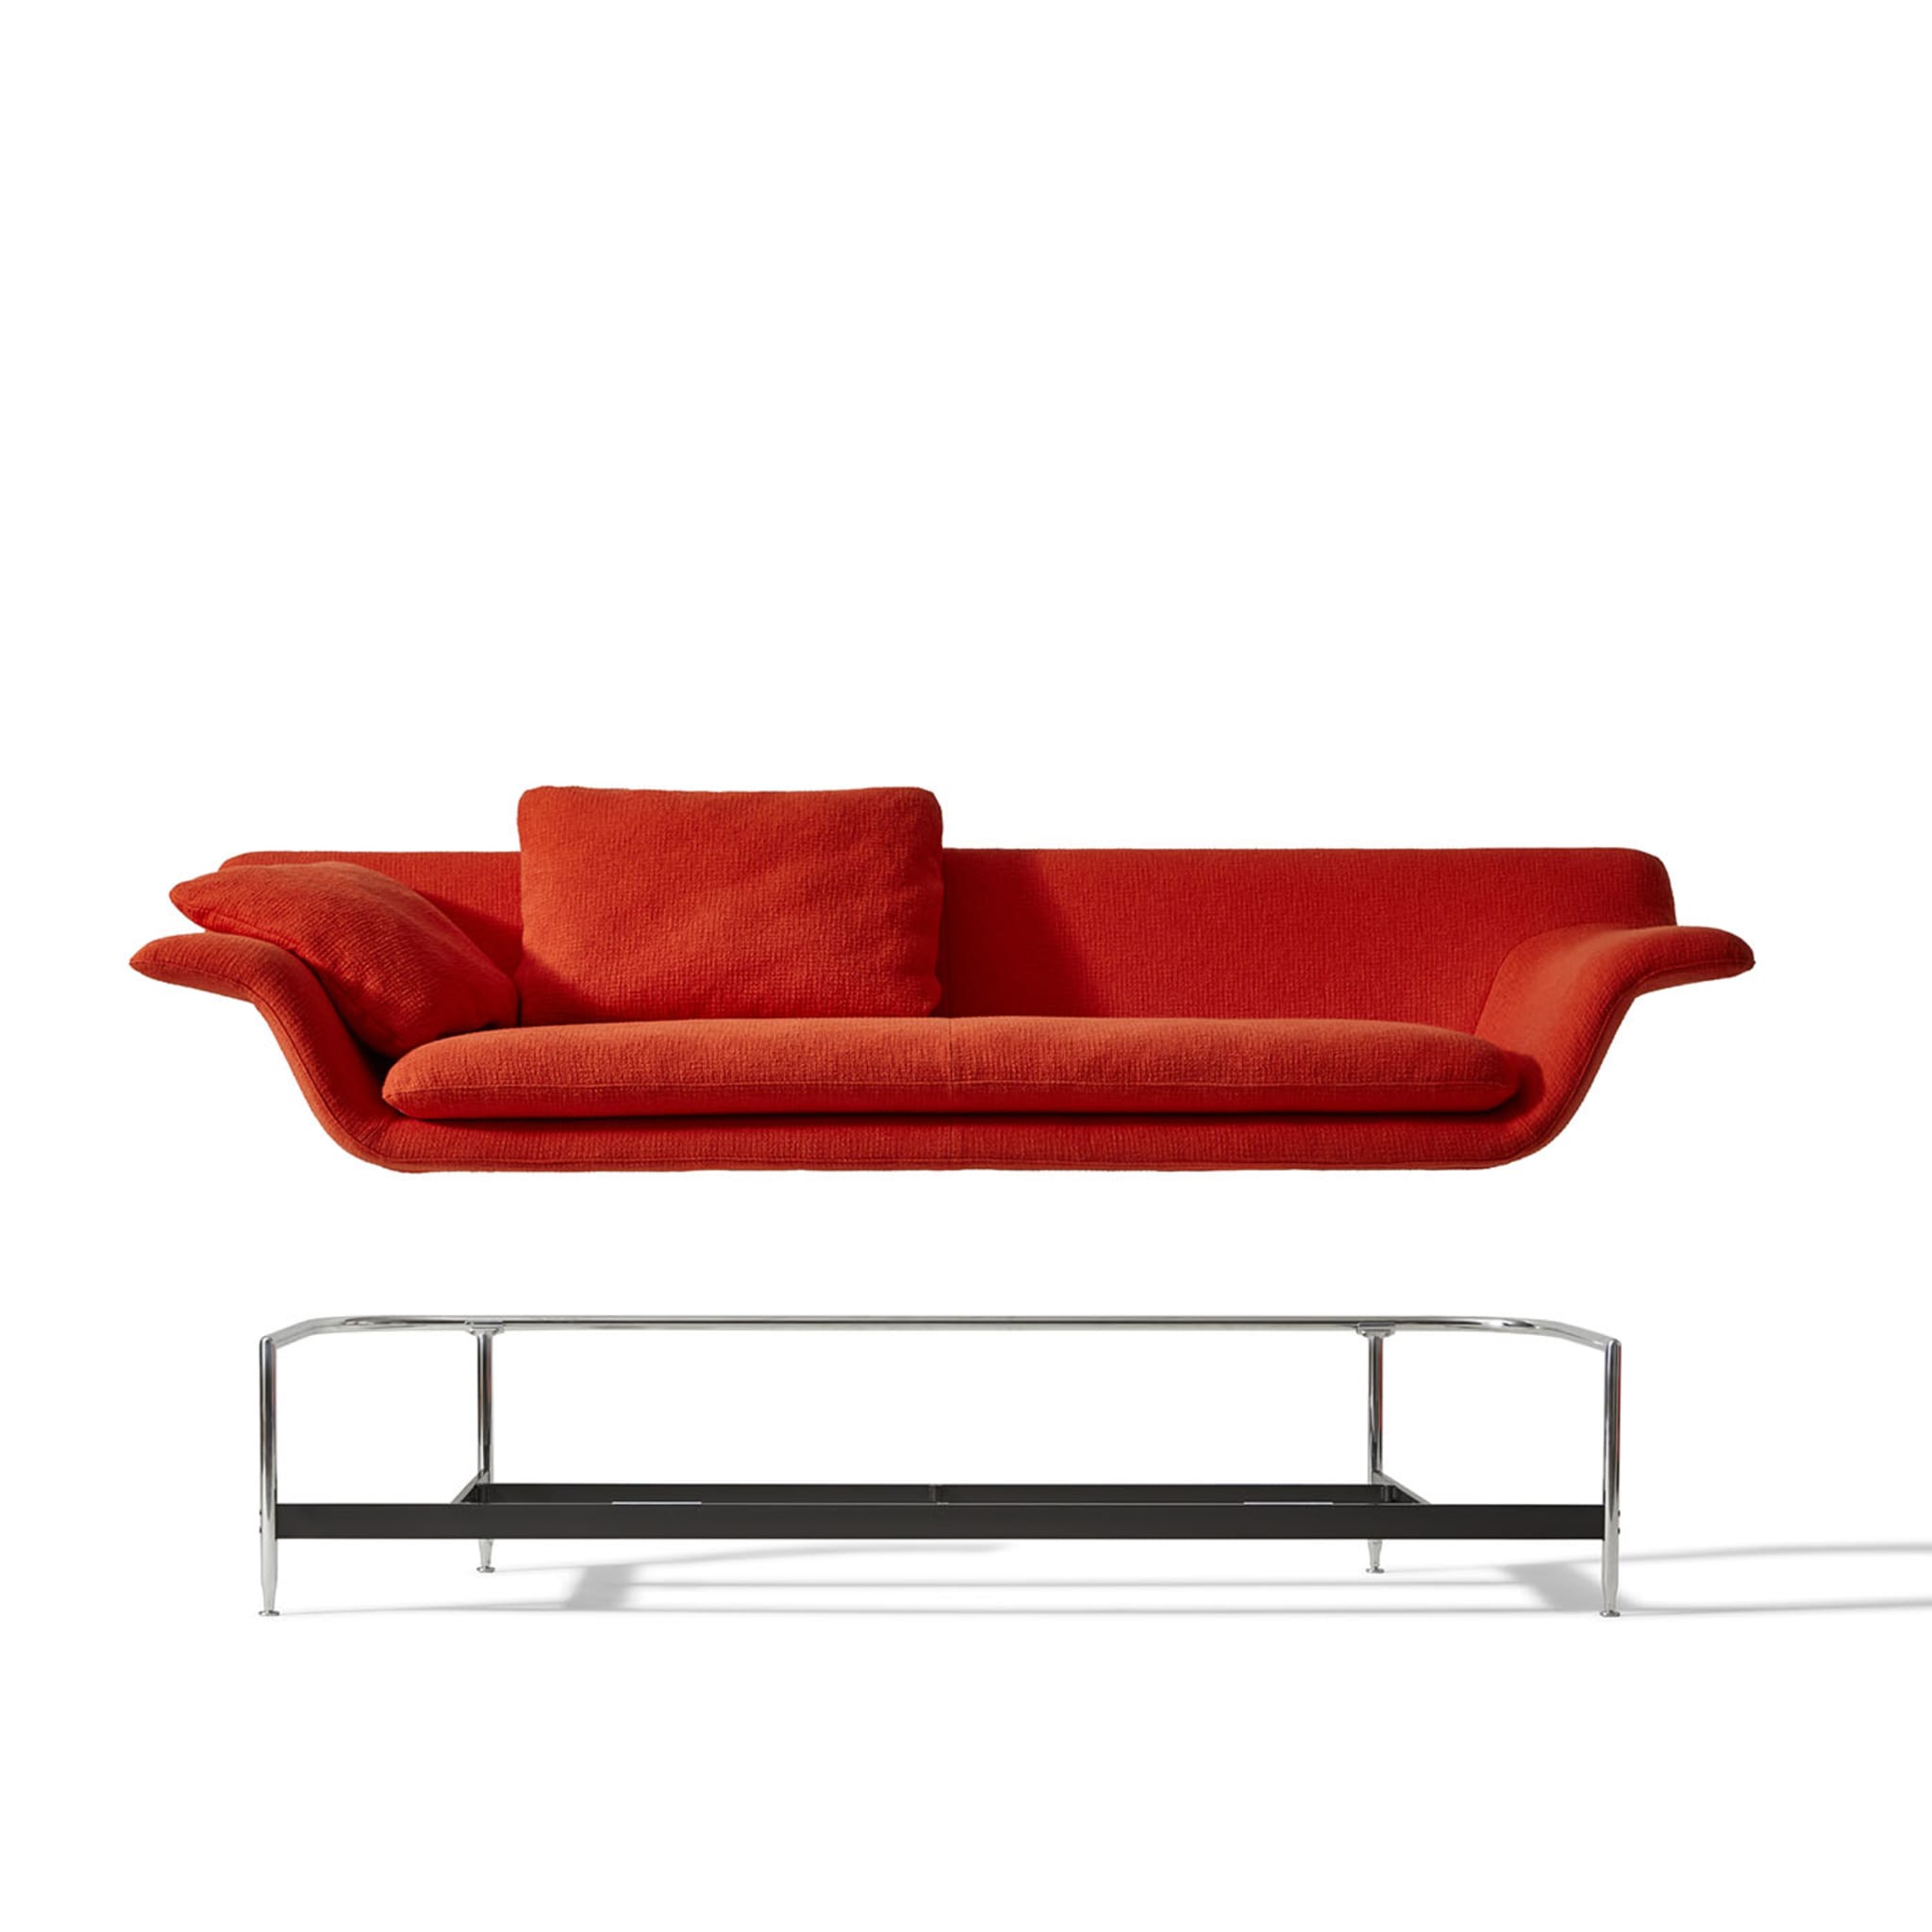 Esosoft 3-Seater Orange Sofa by Antonio Citterio - Alternative view 5